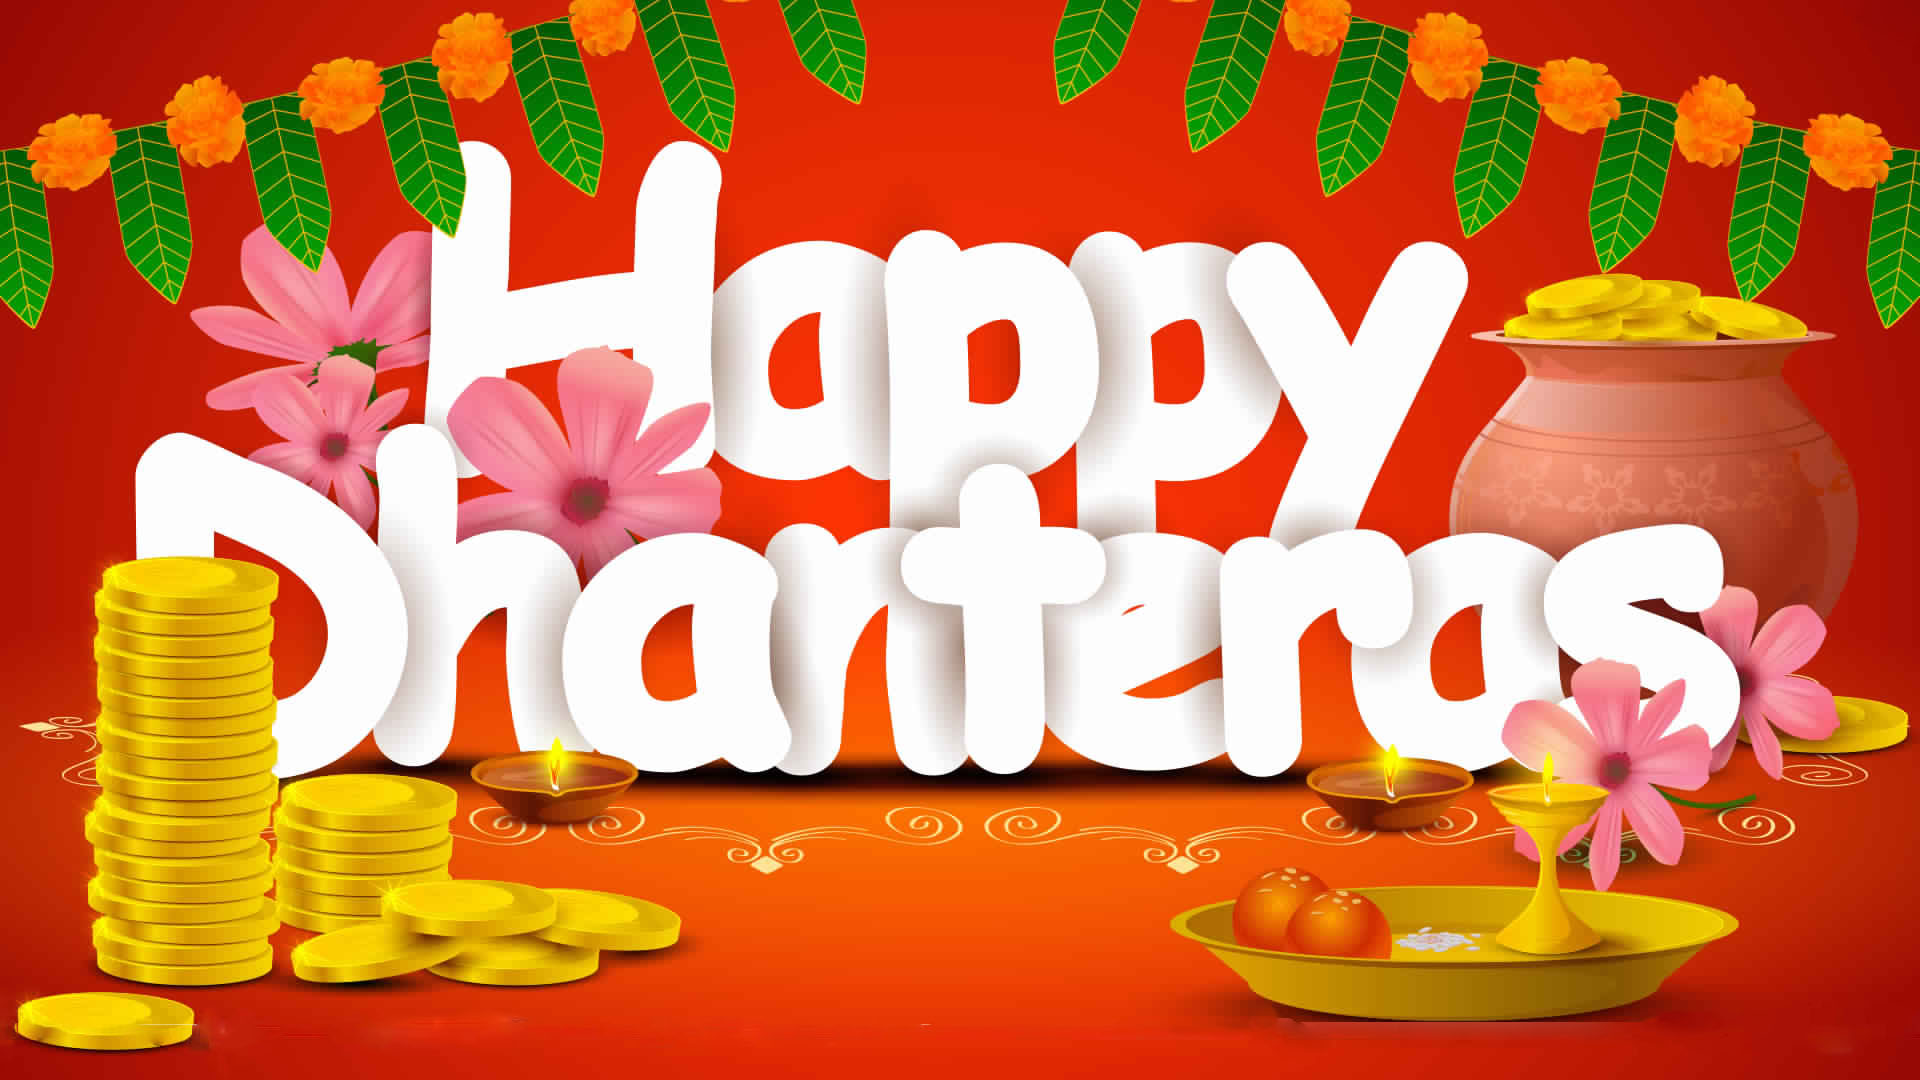 Happy Dhanteras Images Free Download | Dhanteras